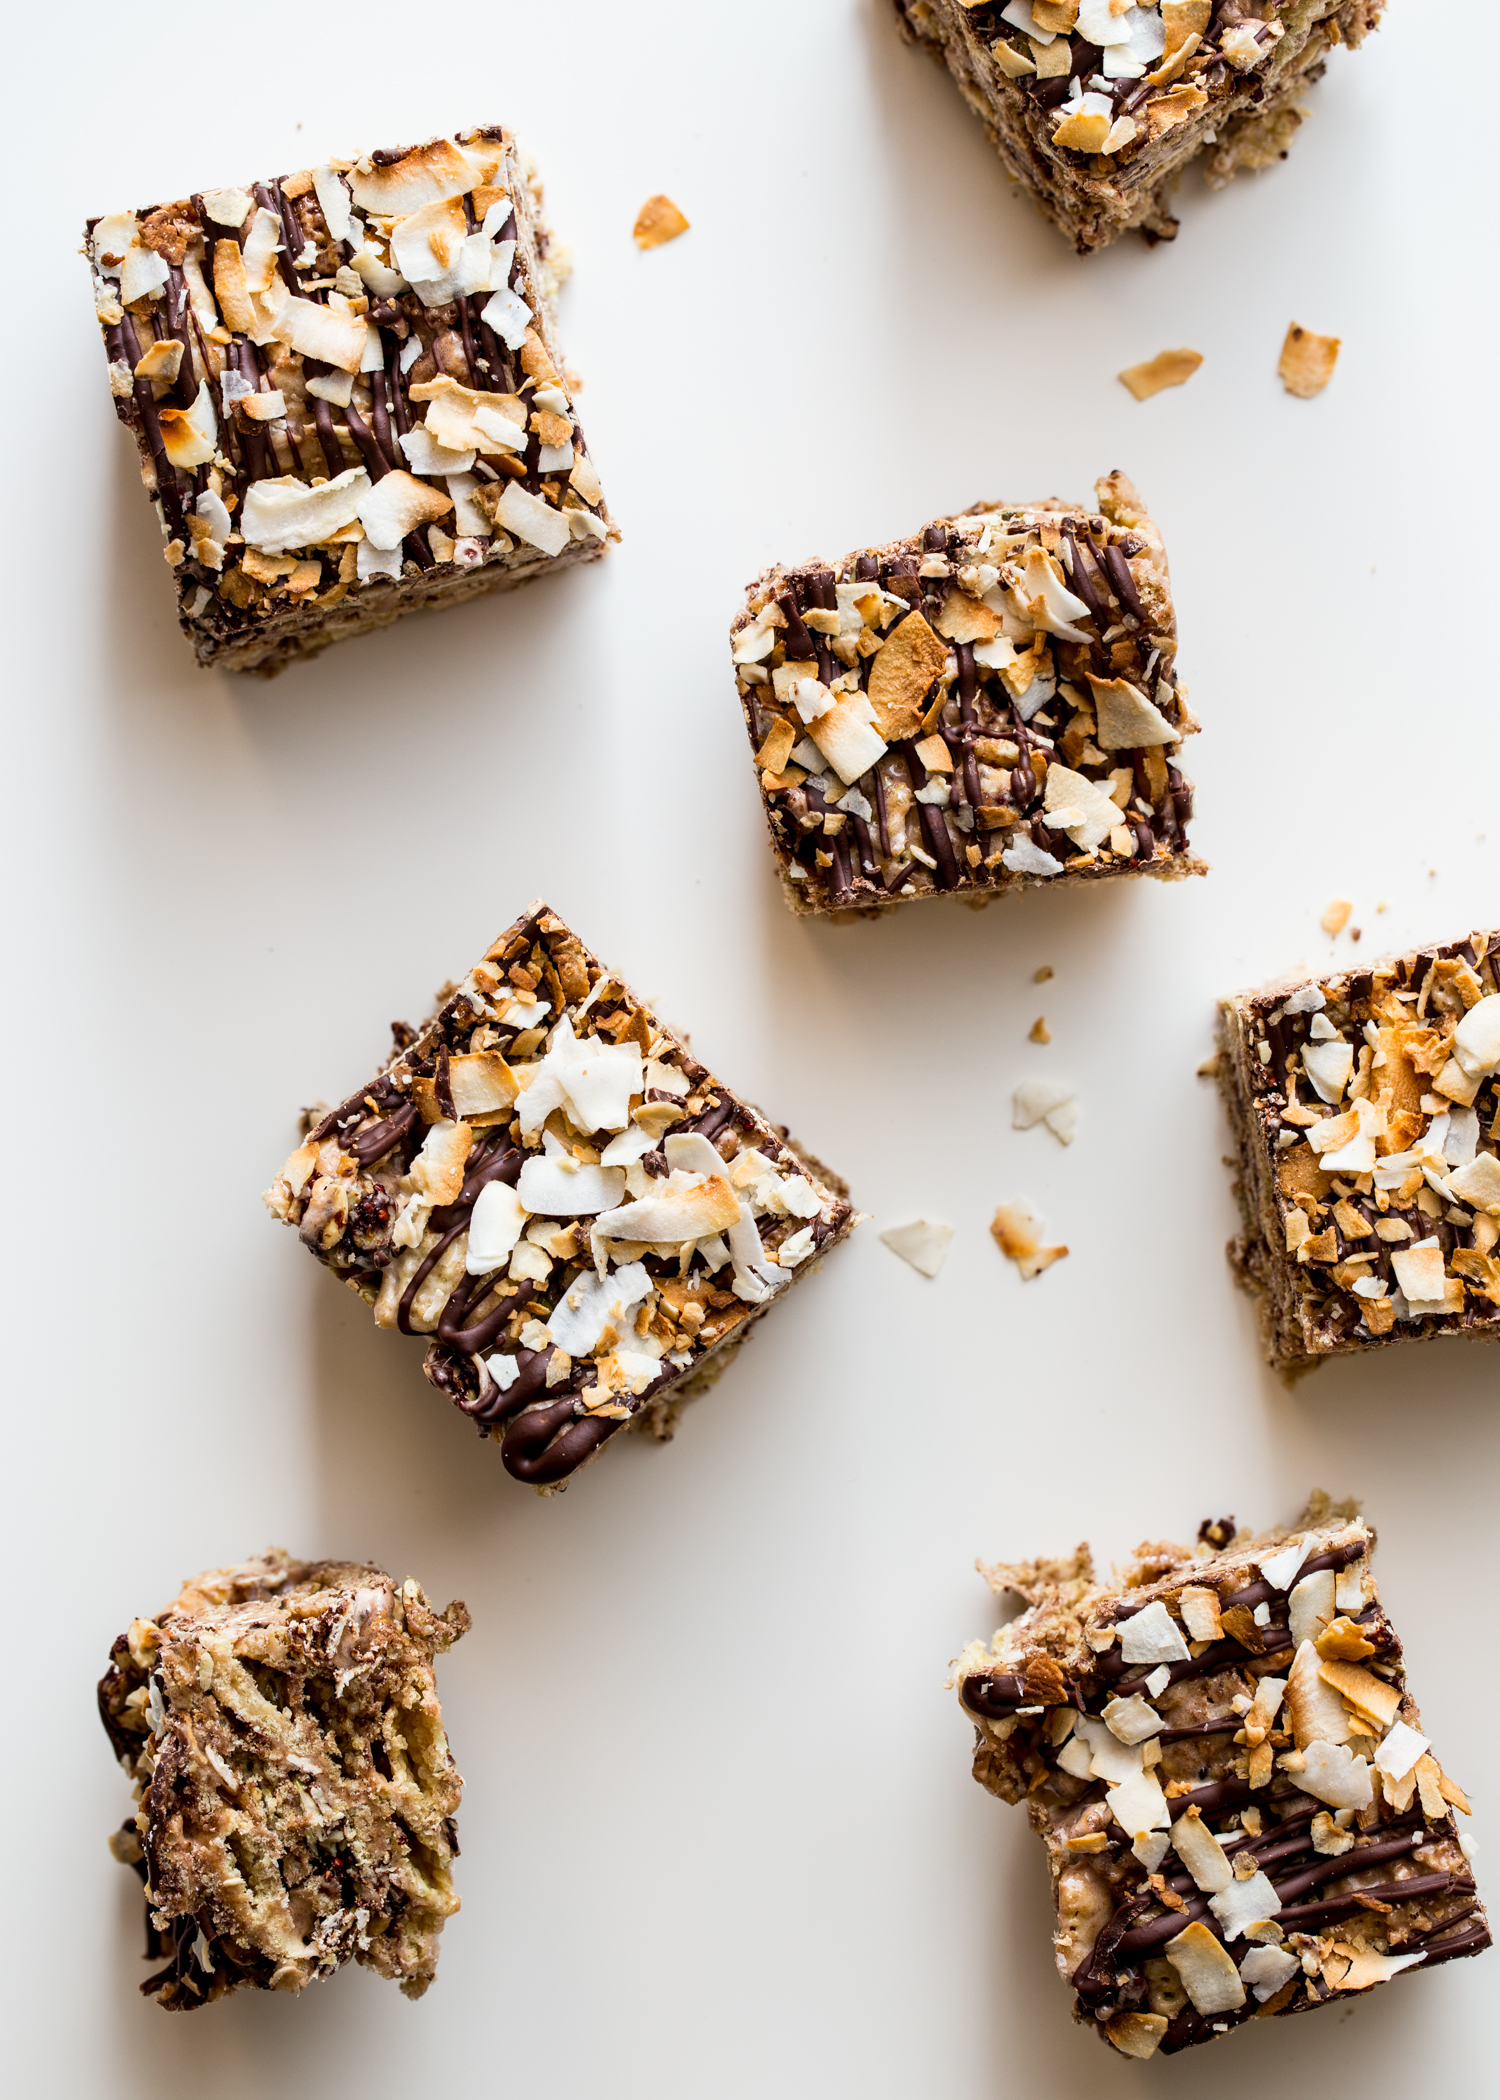 Chocolate Coconut Marshmallow Treats are no-bake and gluten free